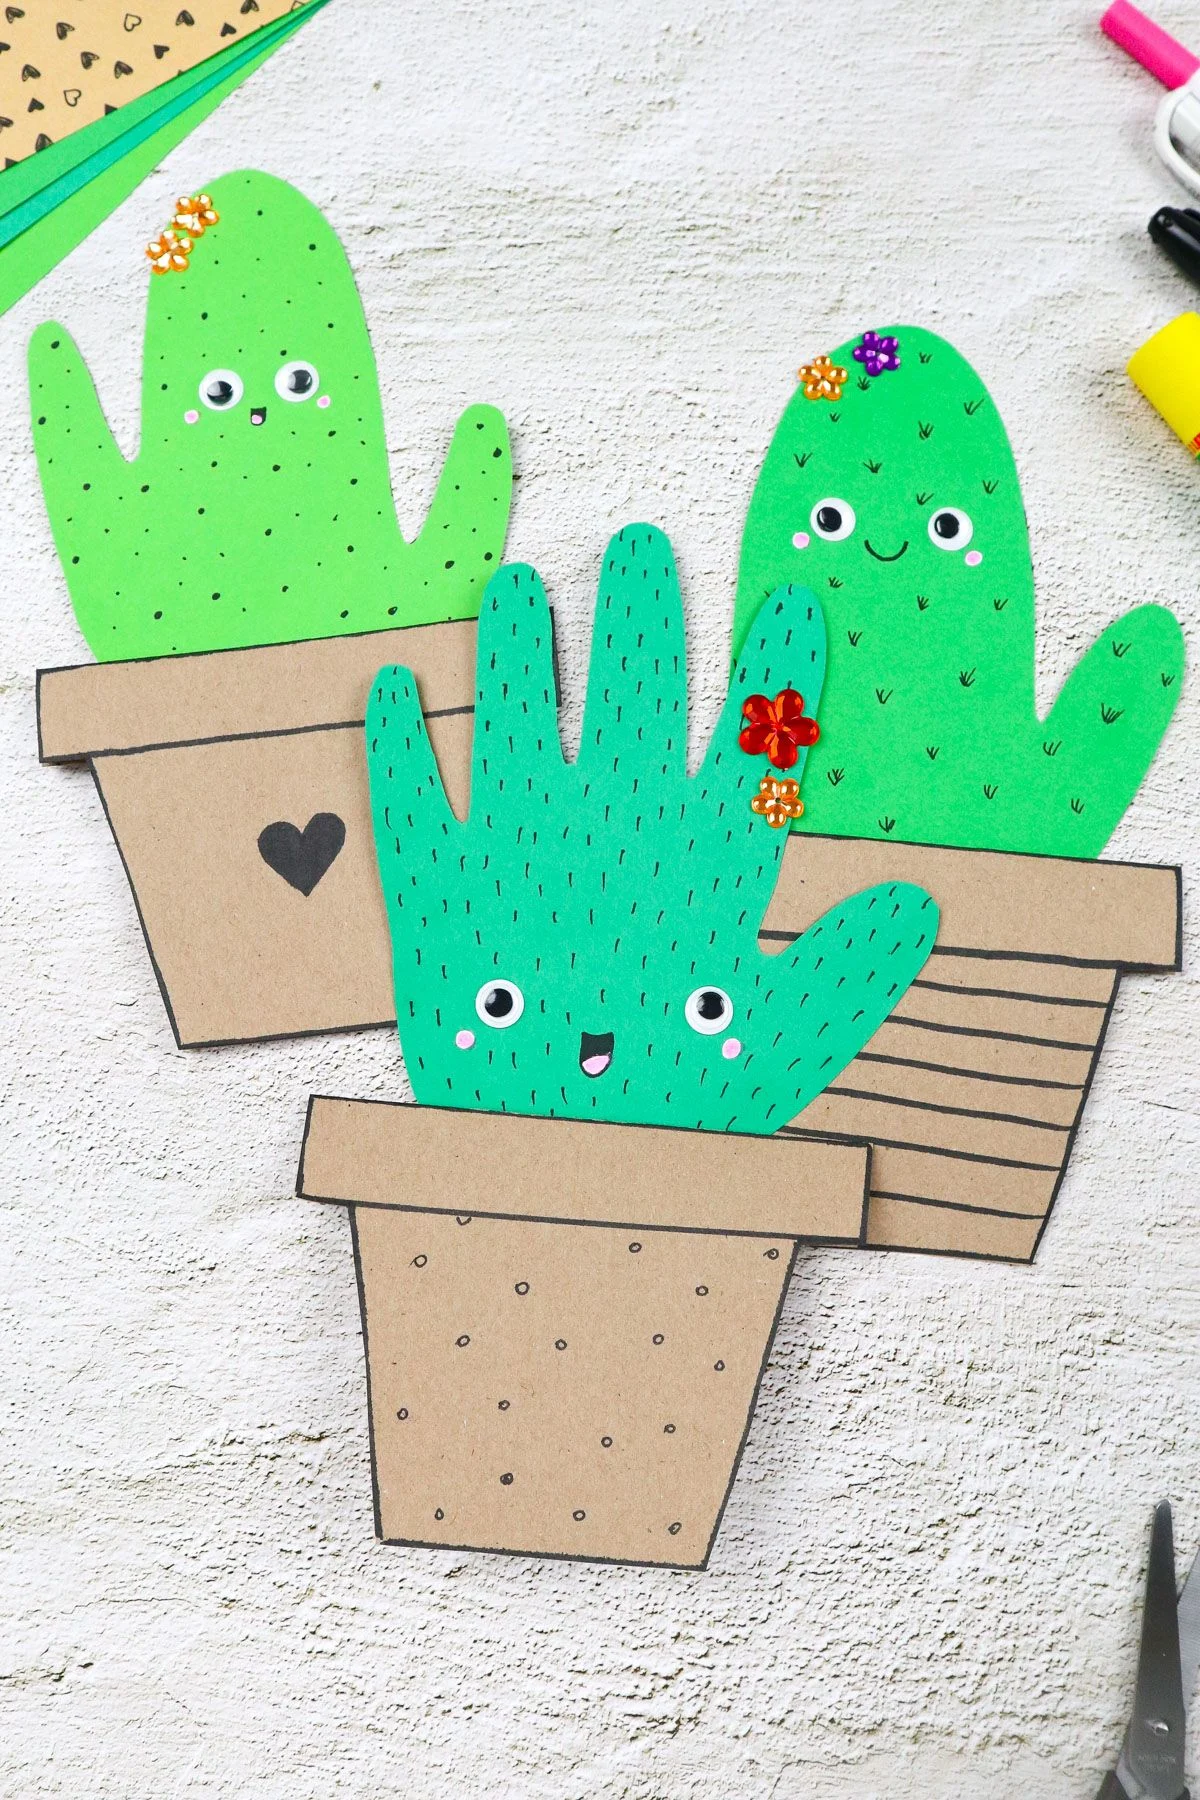 DIY Handprint Cactus